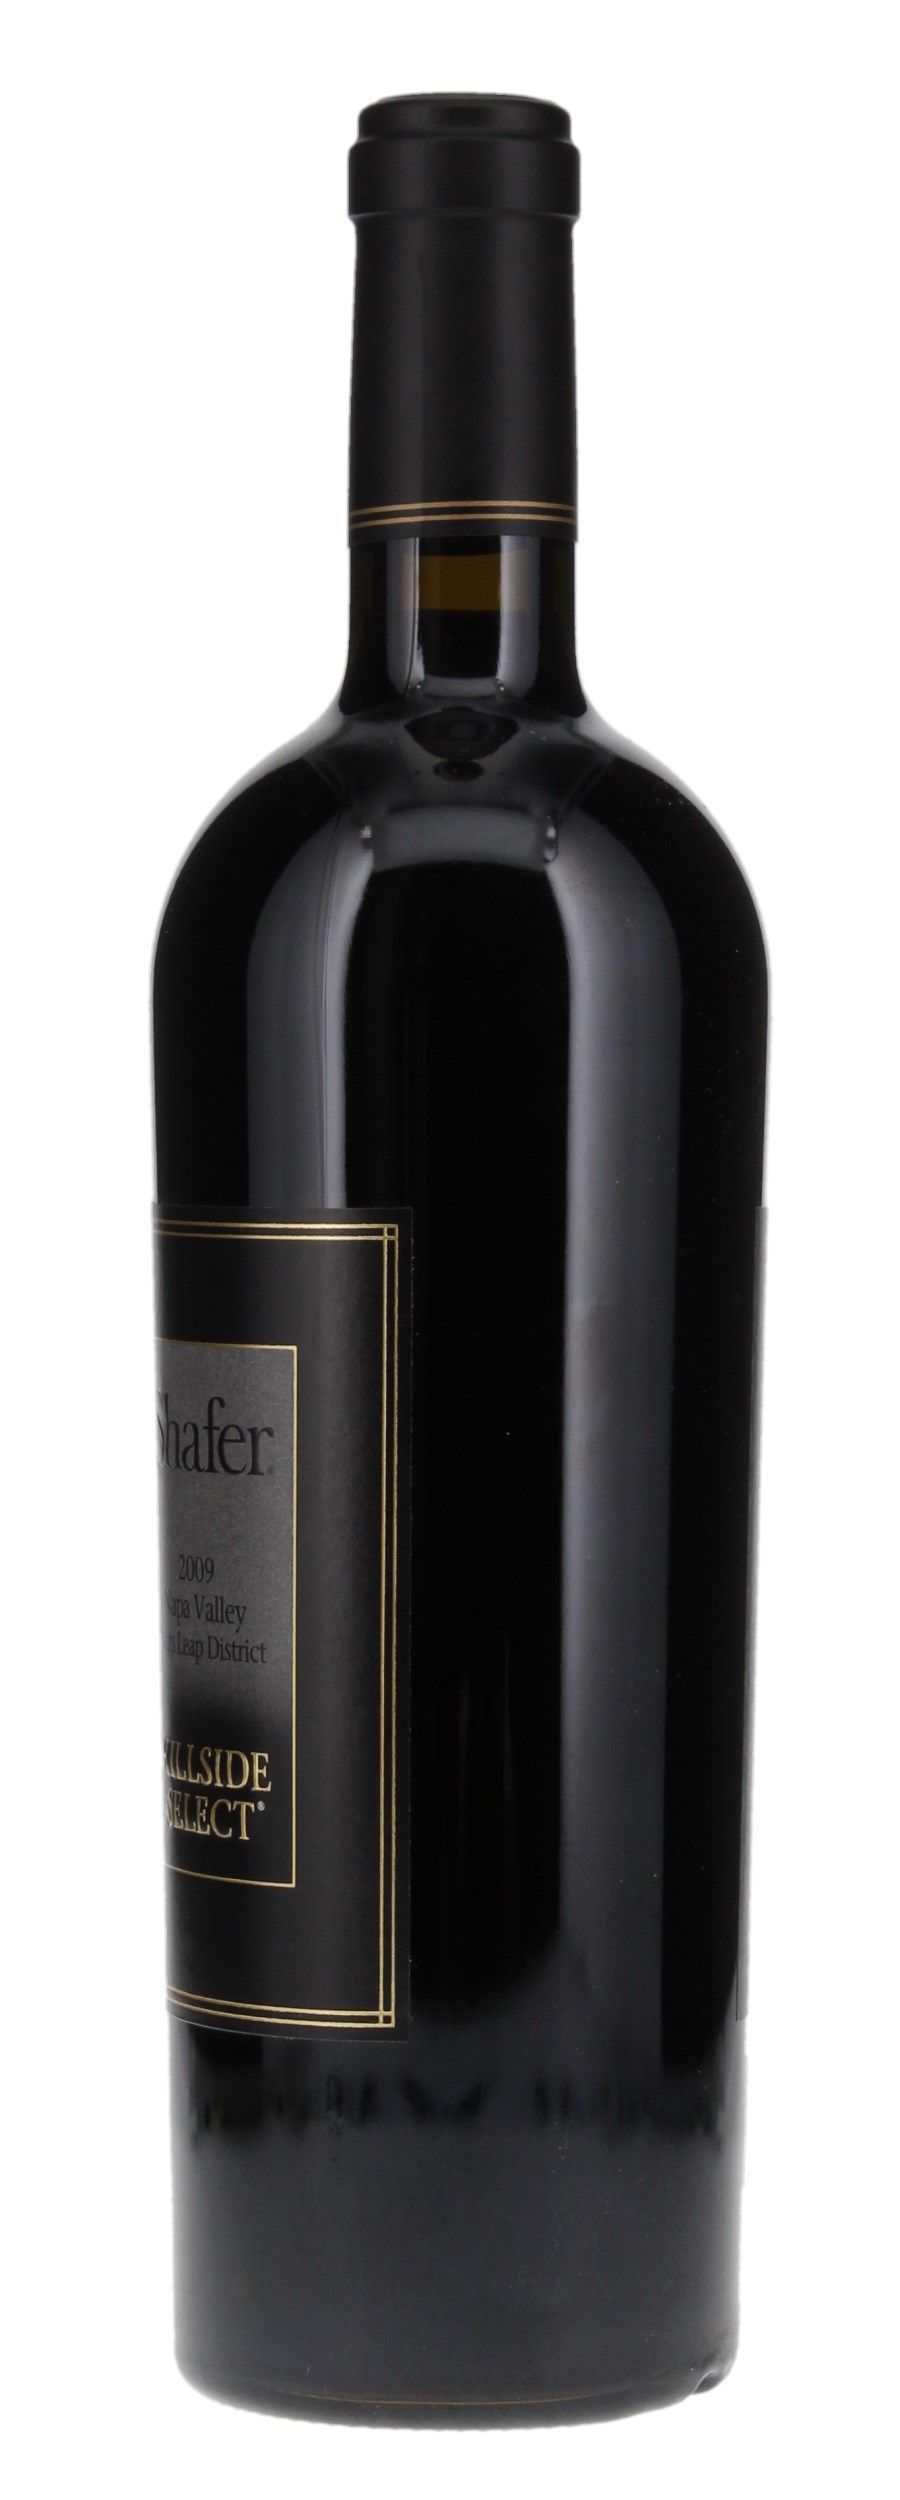 2009 Shafer Vineyards Hillside Select Cabernet Sauvignon, 750ml